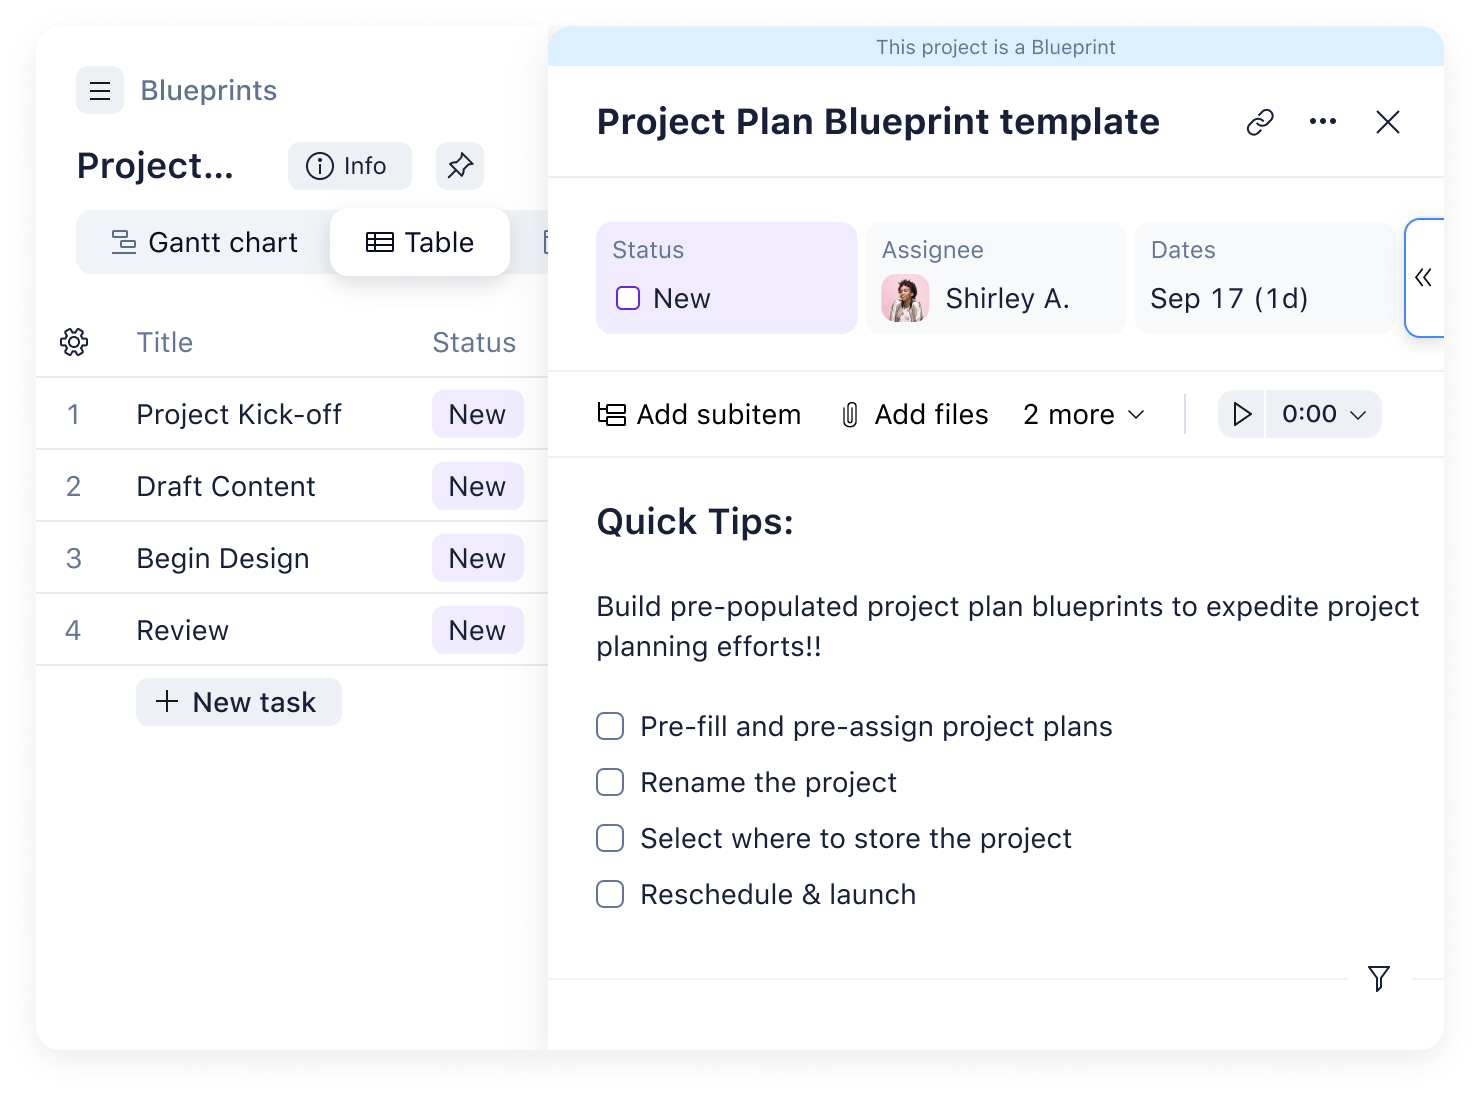 wrike-project-blueprint